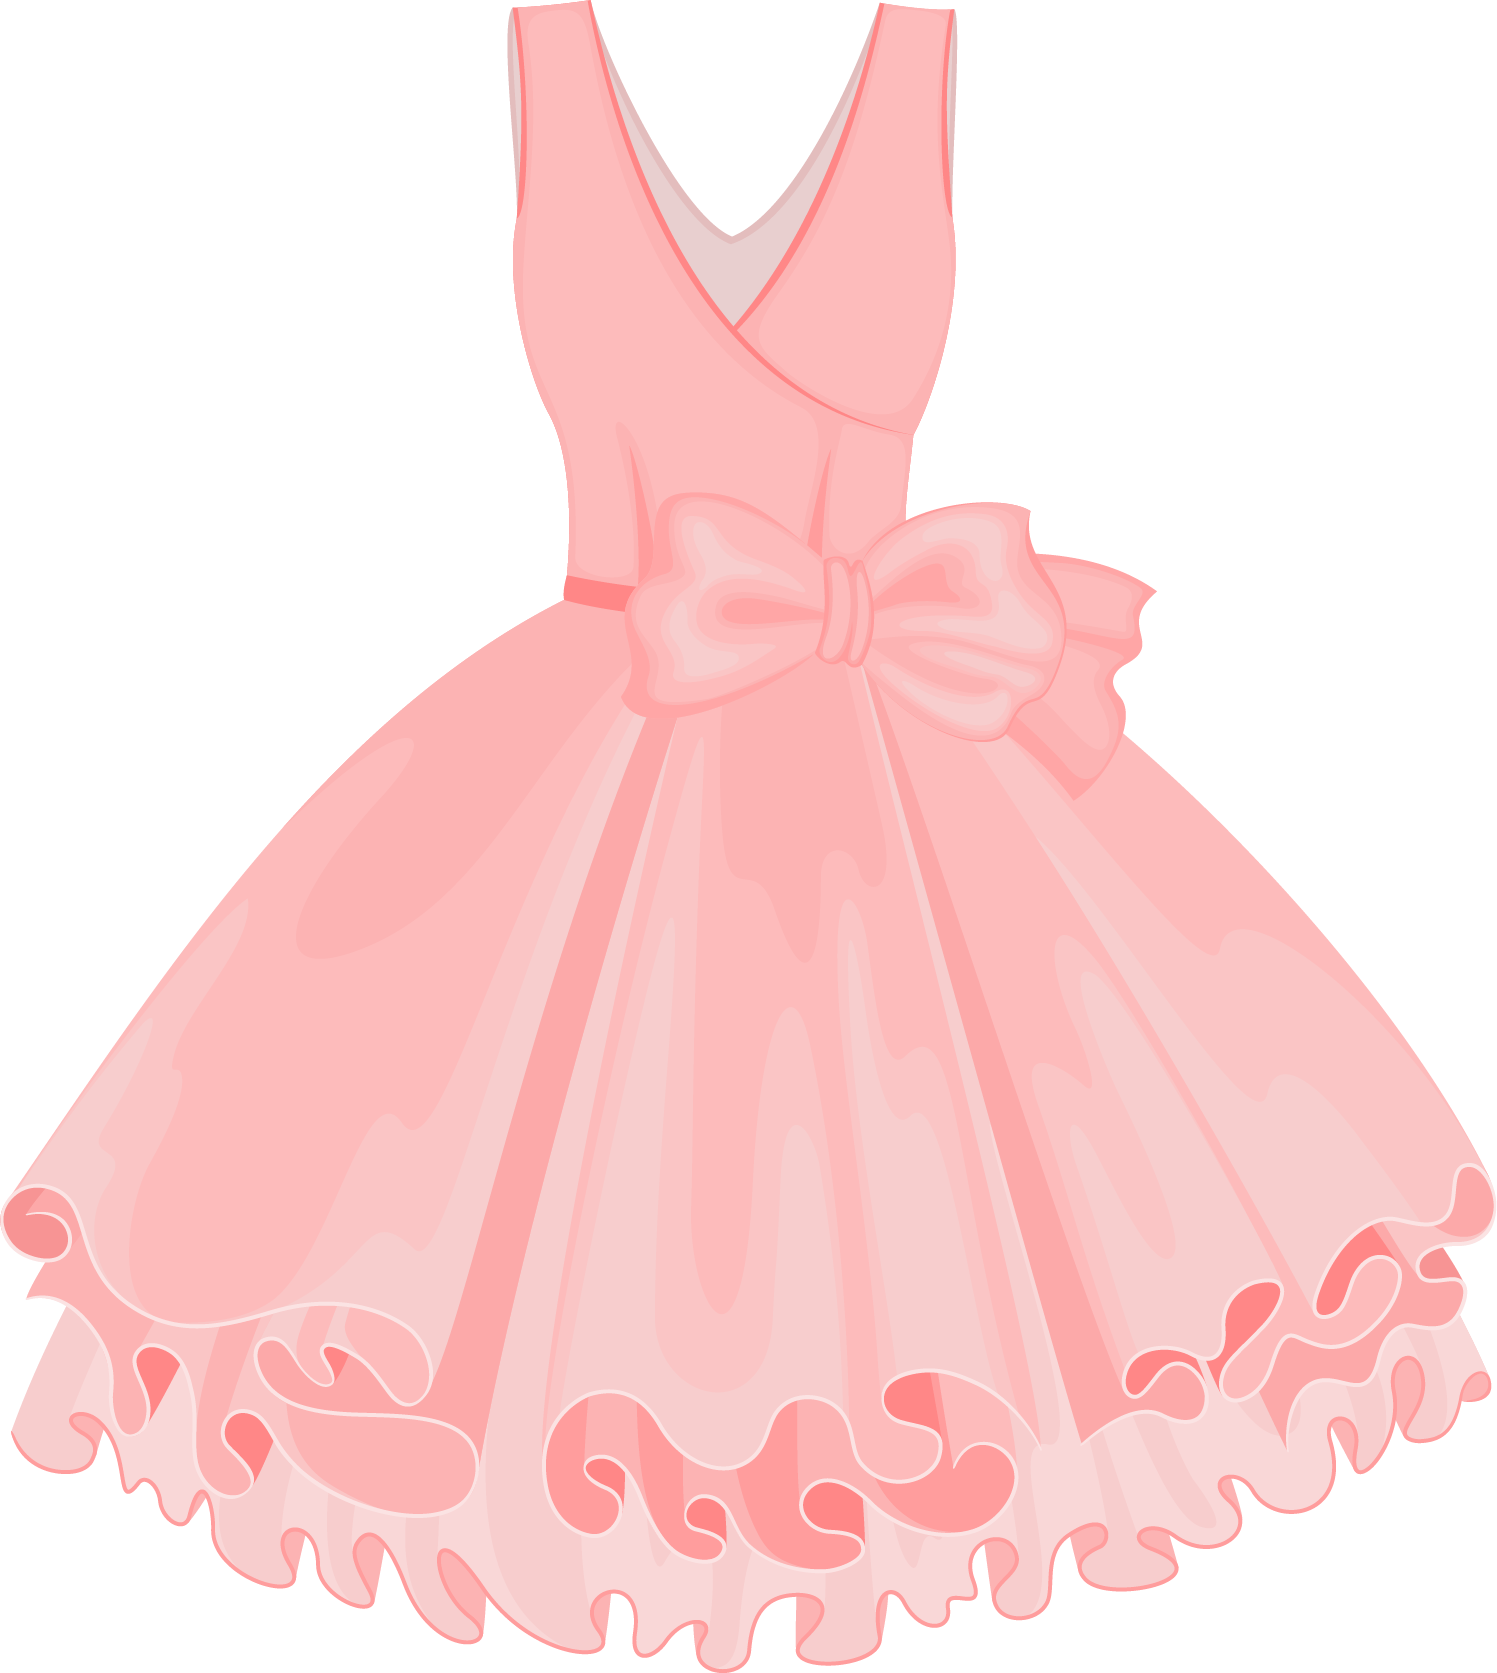 Pink Painted Dress Vector Skirt Tutu Clipart Vector